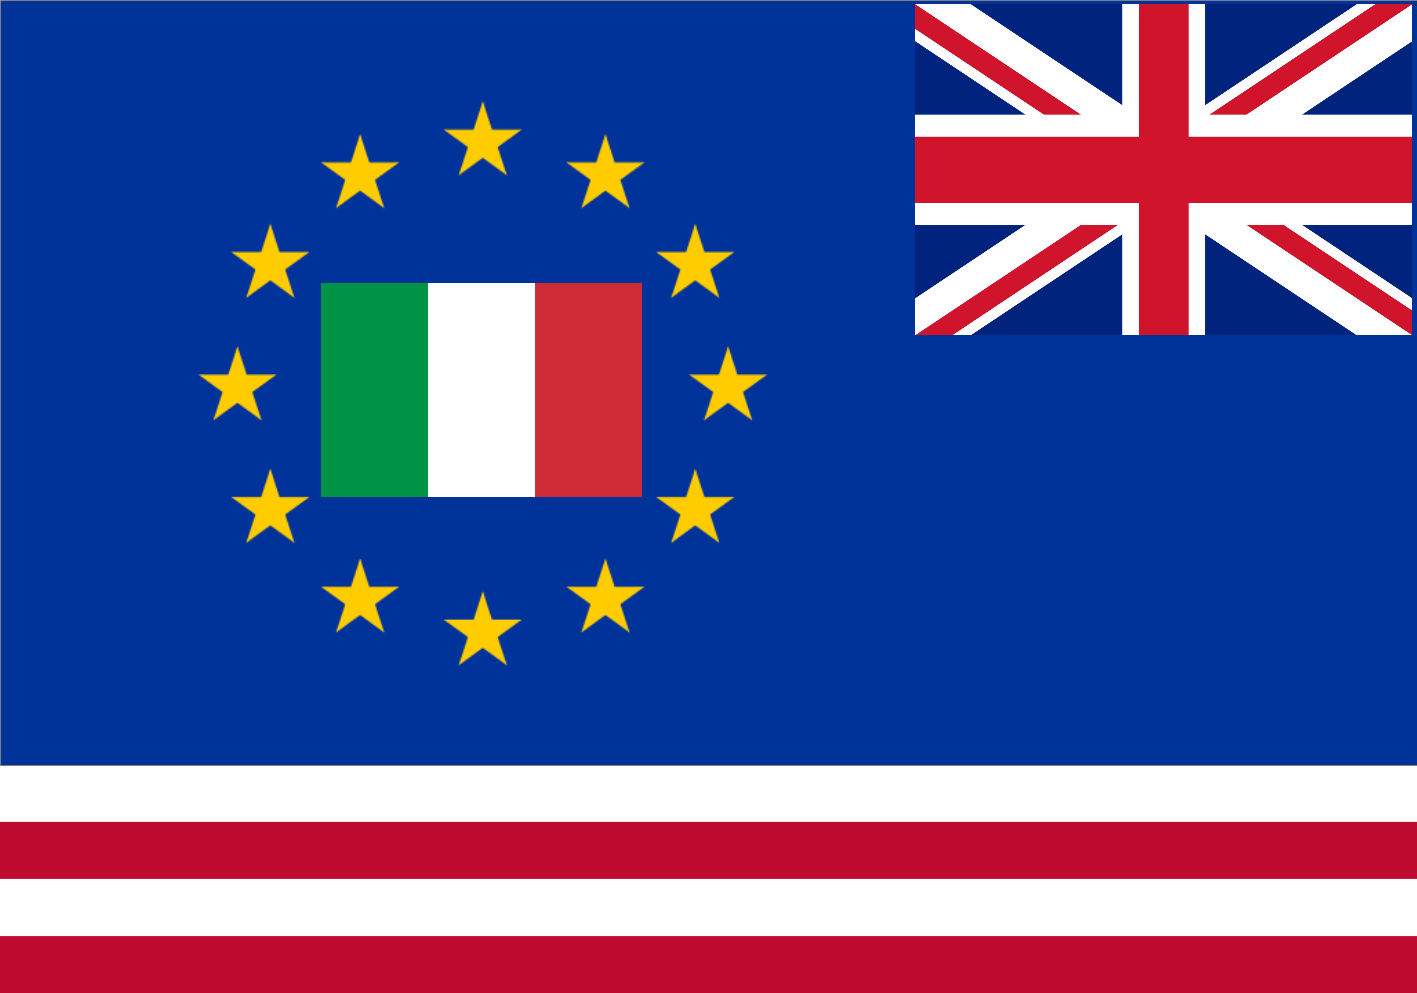 Duccio_studio_flag_pro_english_language_post_brexit